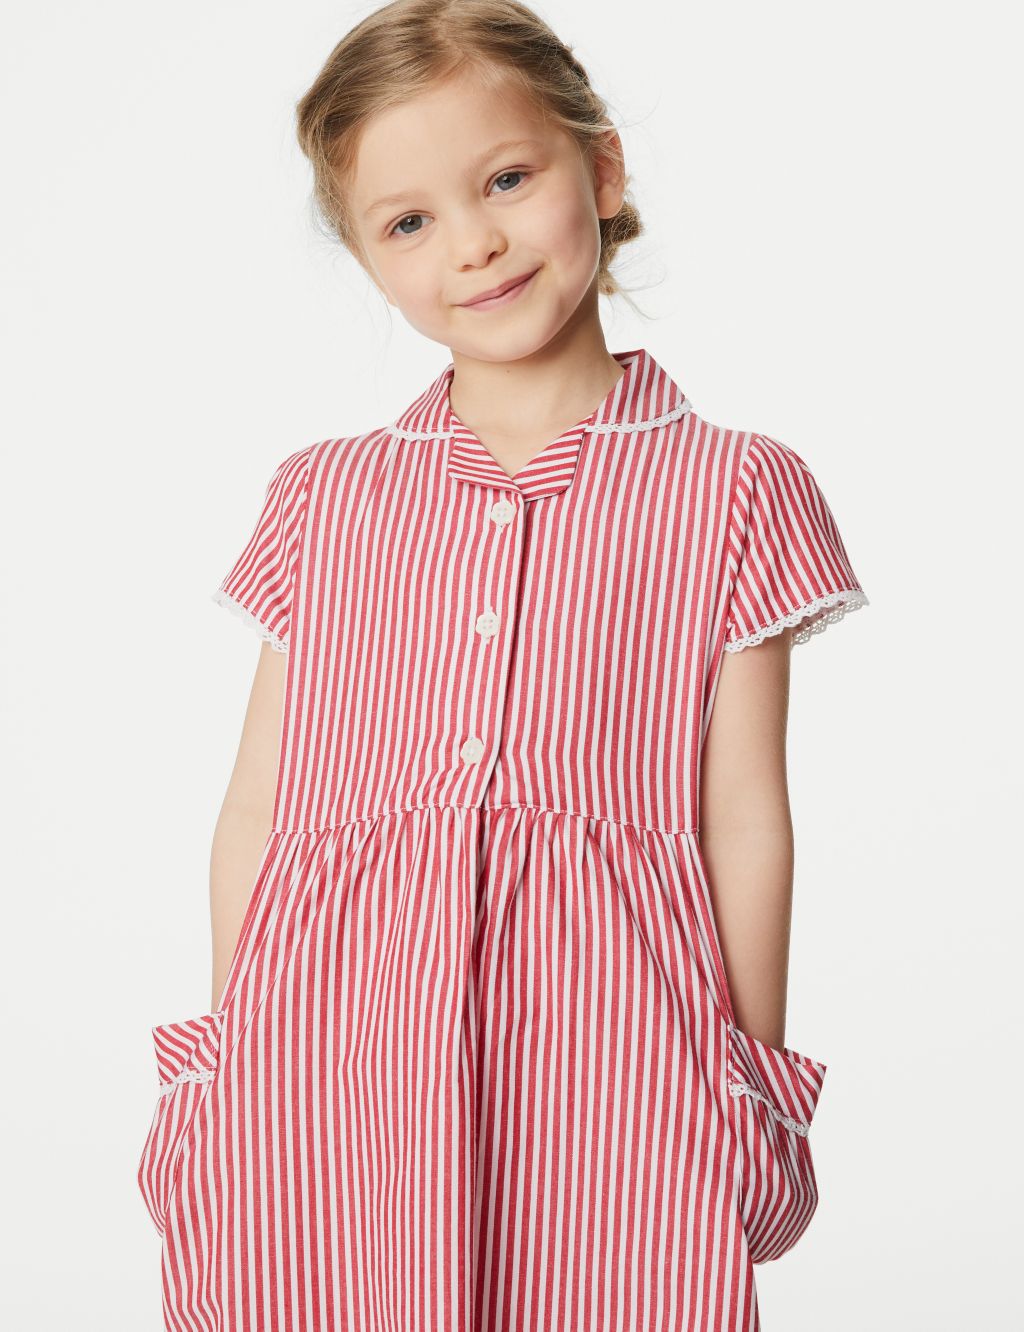 Girls' Pure Cotton Striped School Dress (2-14 Yrs) image 2